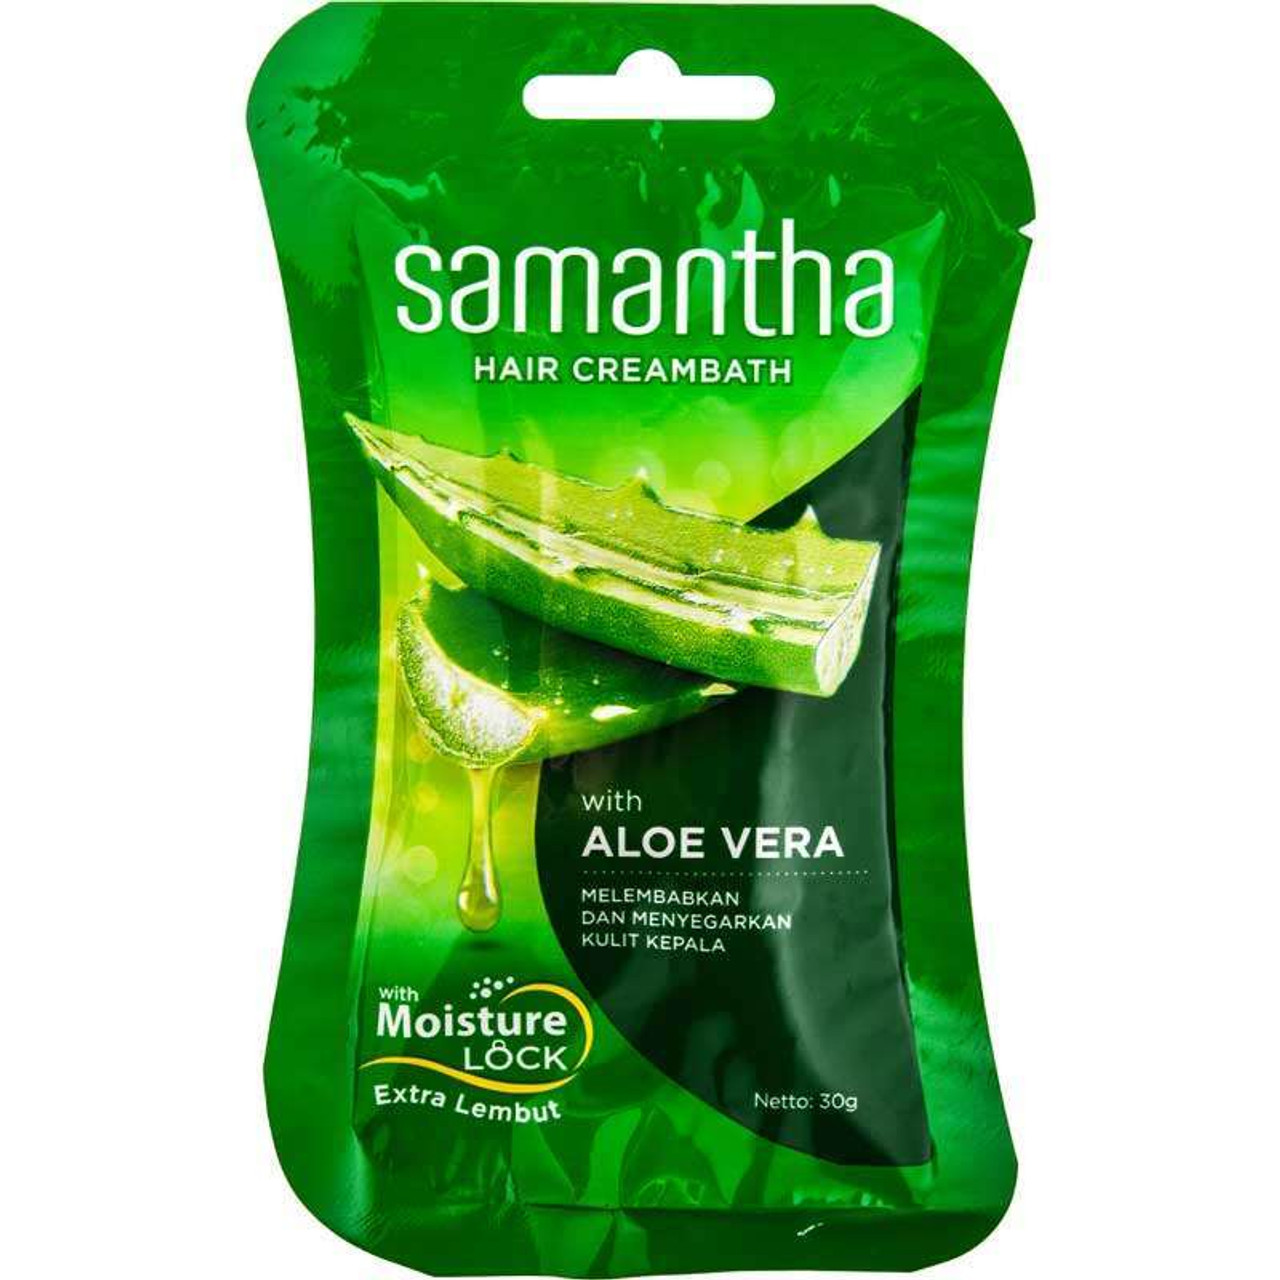 Samantha Hair Creambath Aloe Vera 30g